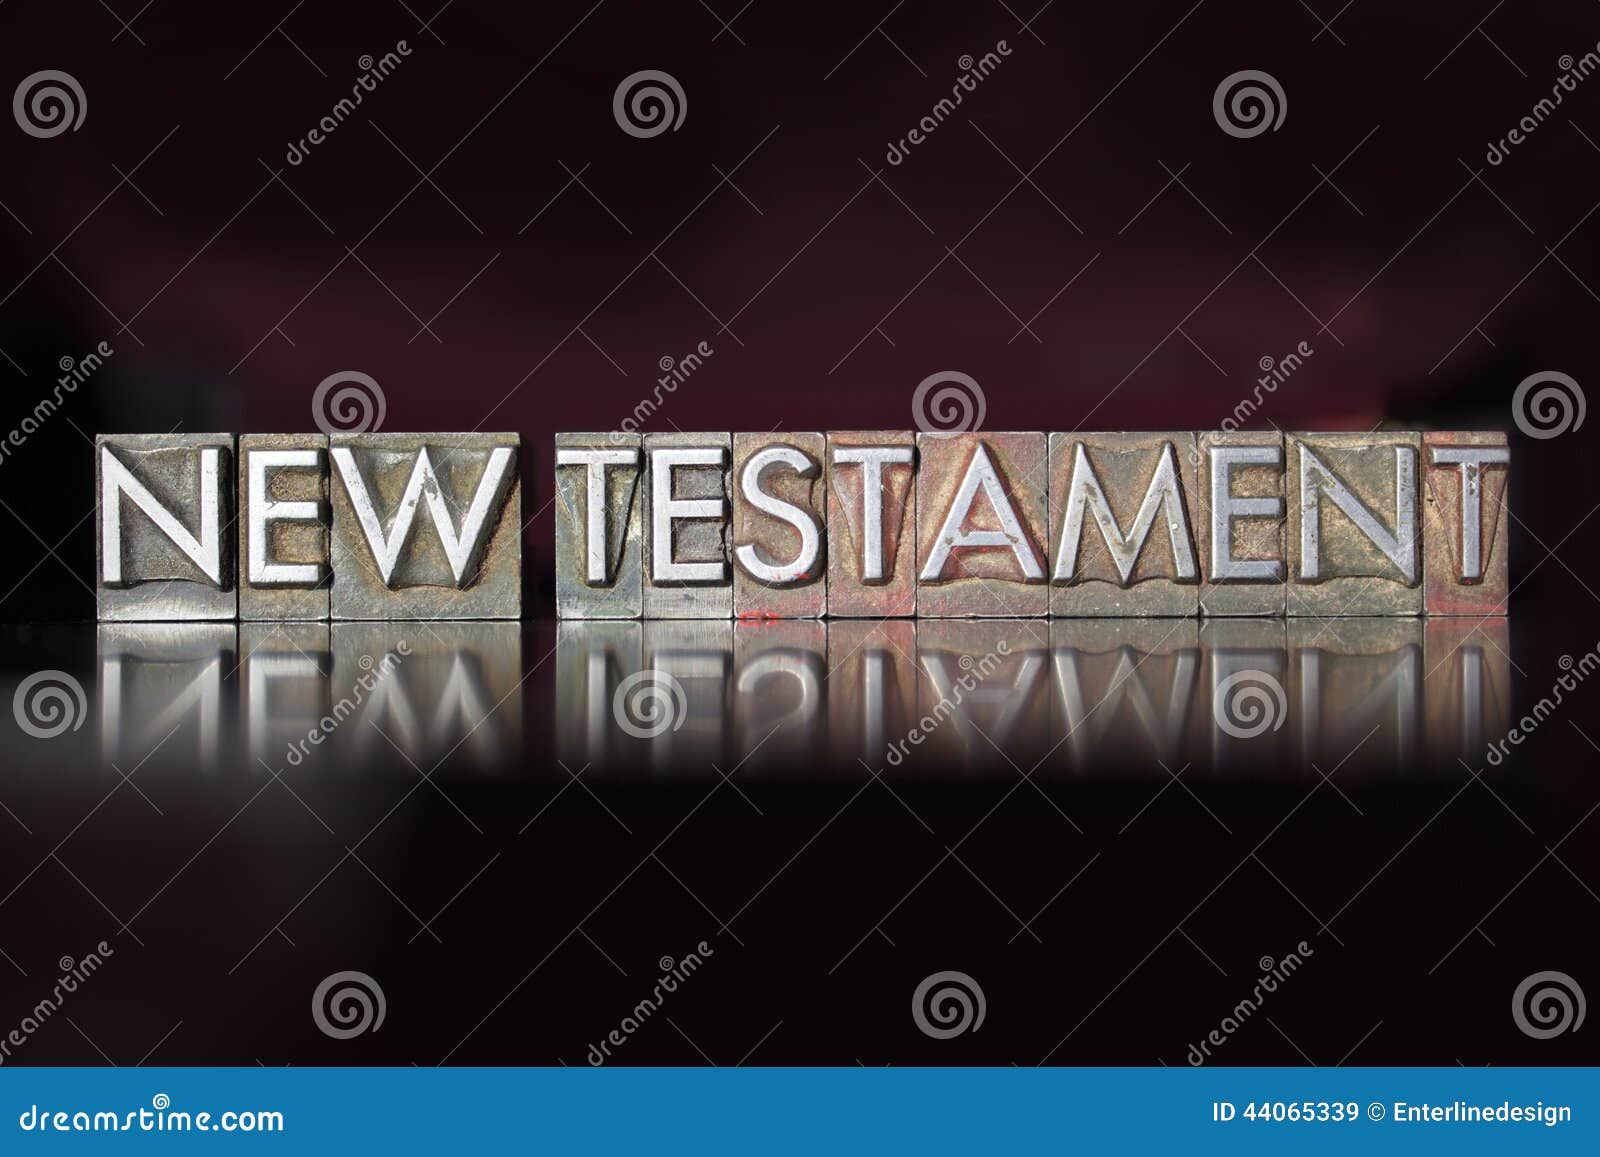 new testament letterpress